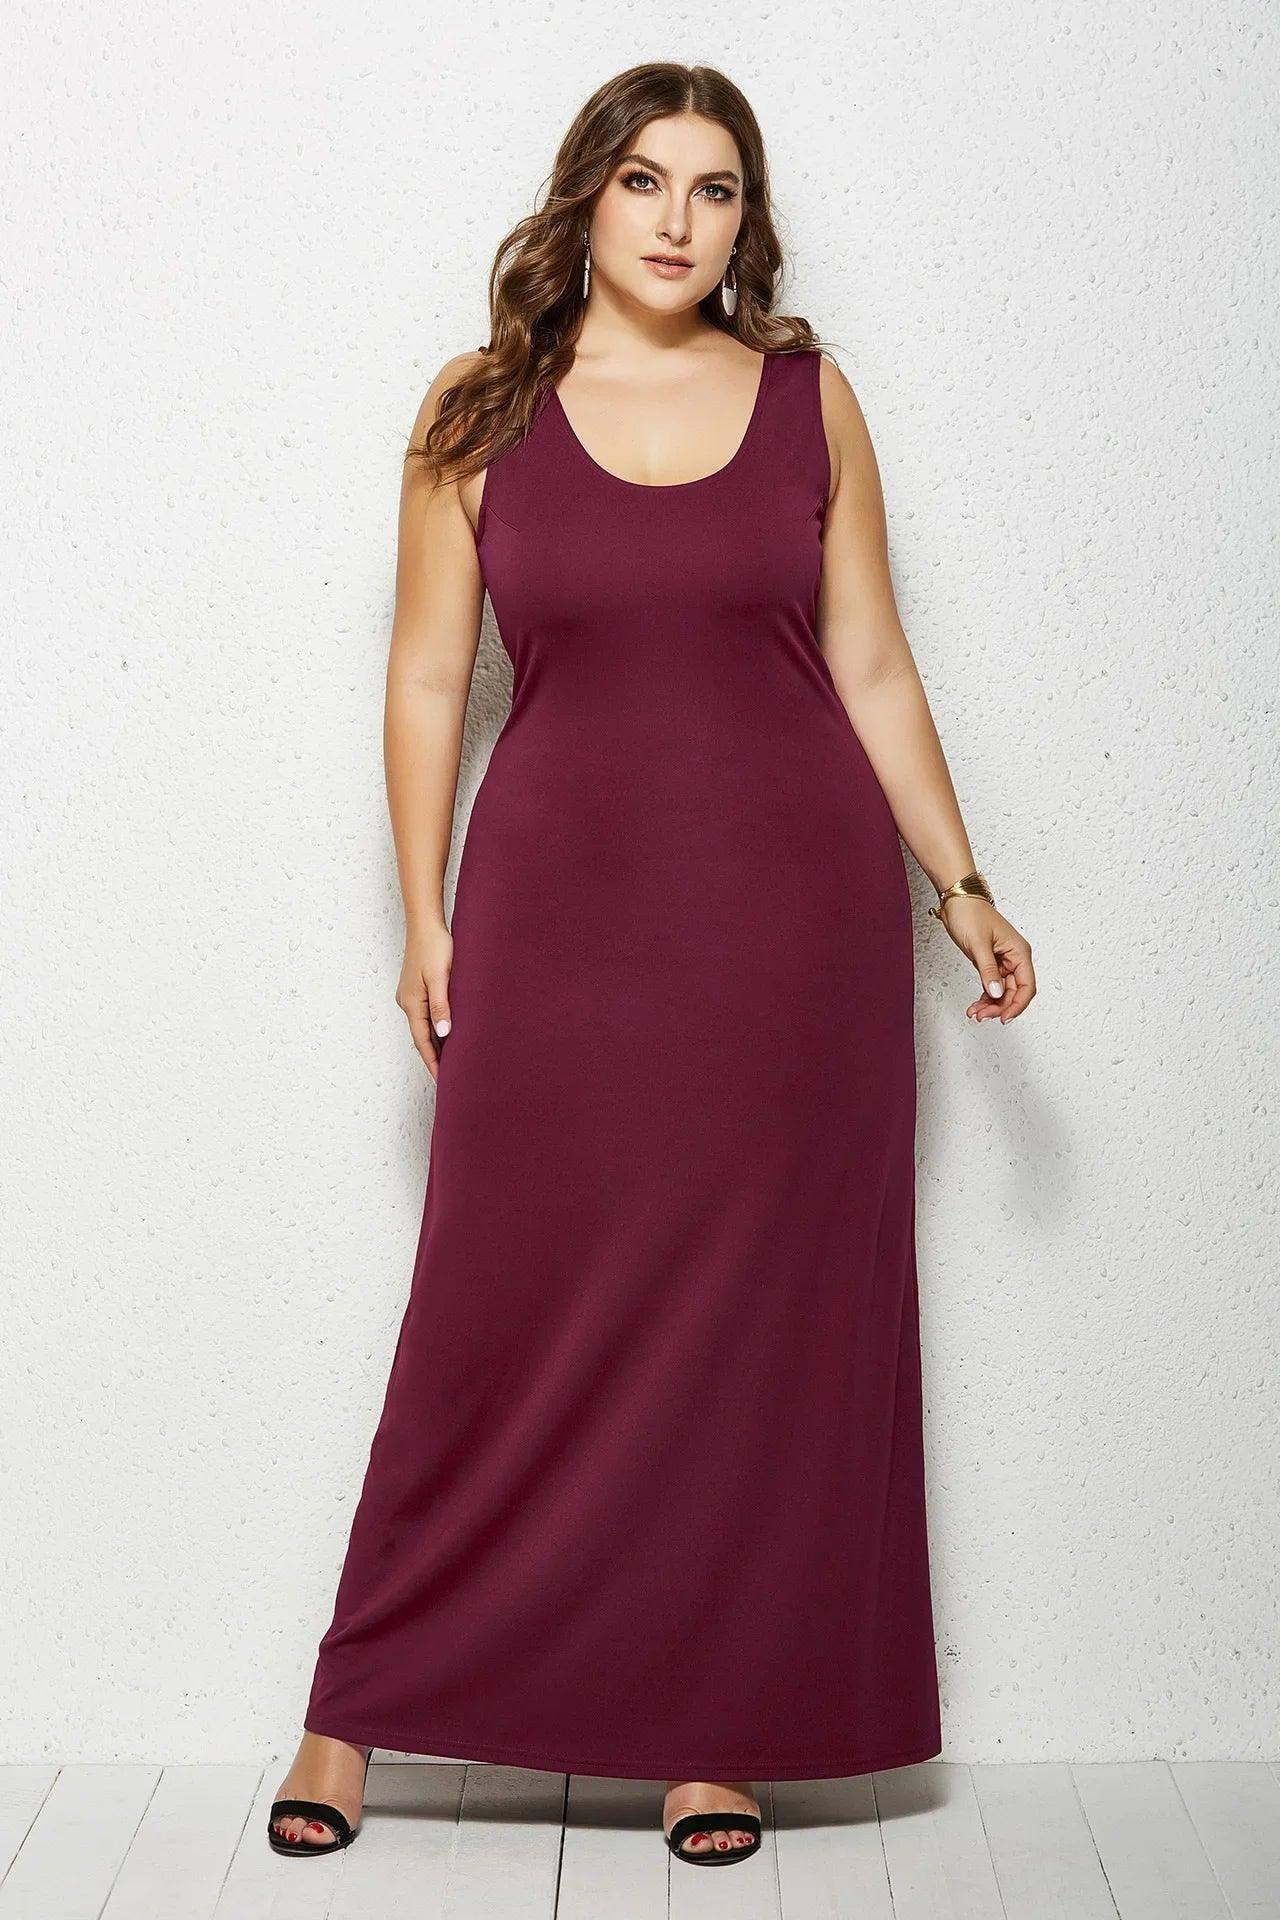 Chic Plus Size Maxi Dresses for Evening Elegance-Burgundy-5